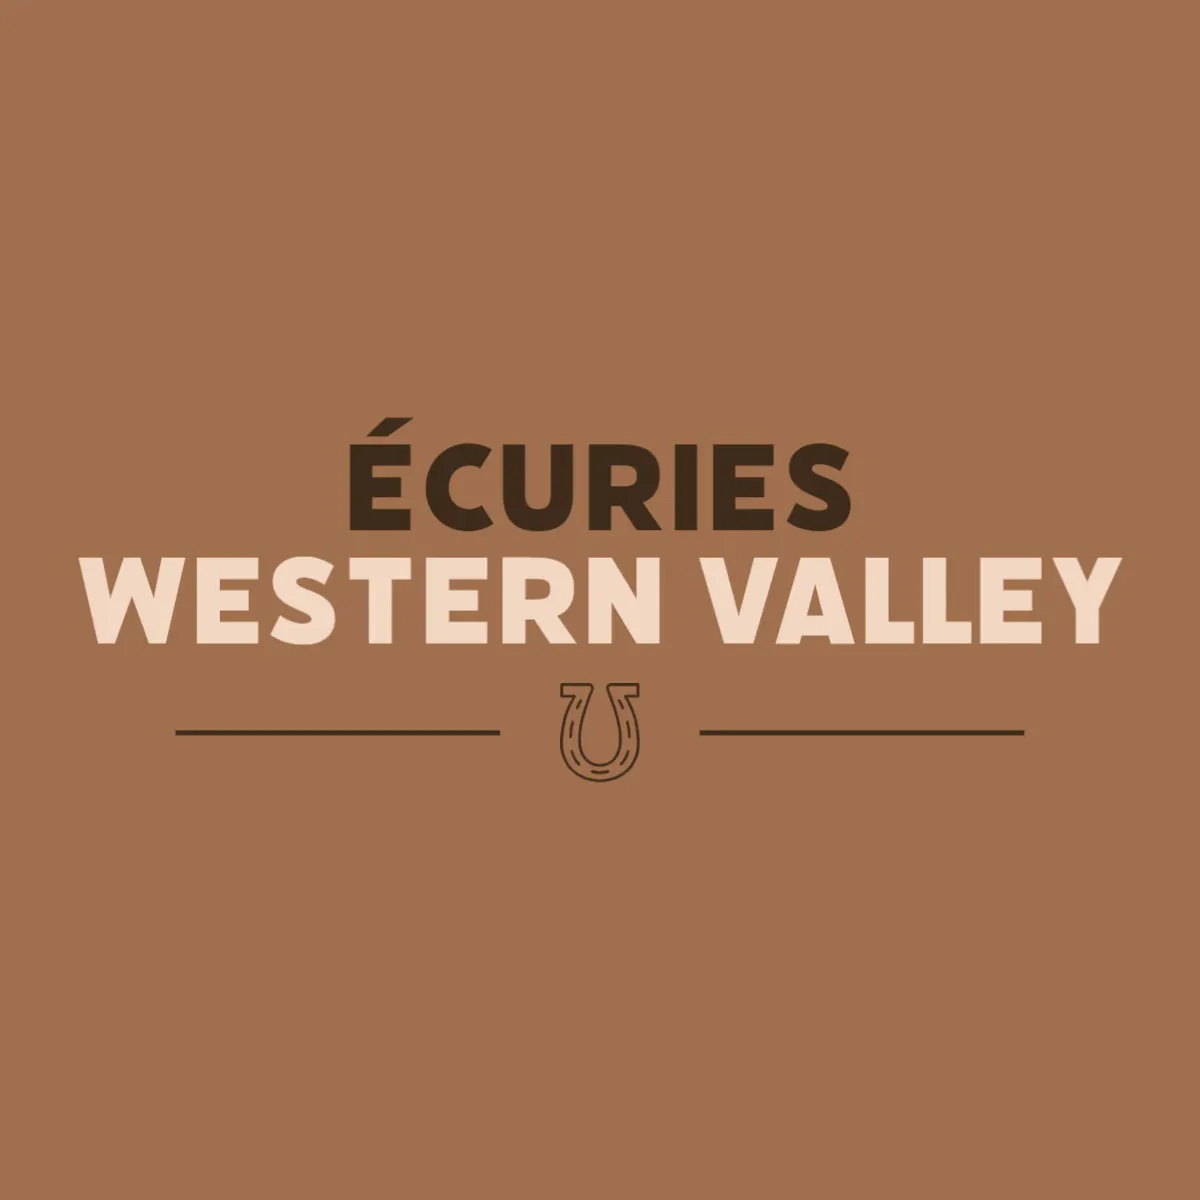 Brown Monochrome Western Horse-Riding T-Shirt Design Logo